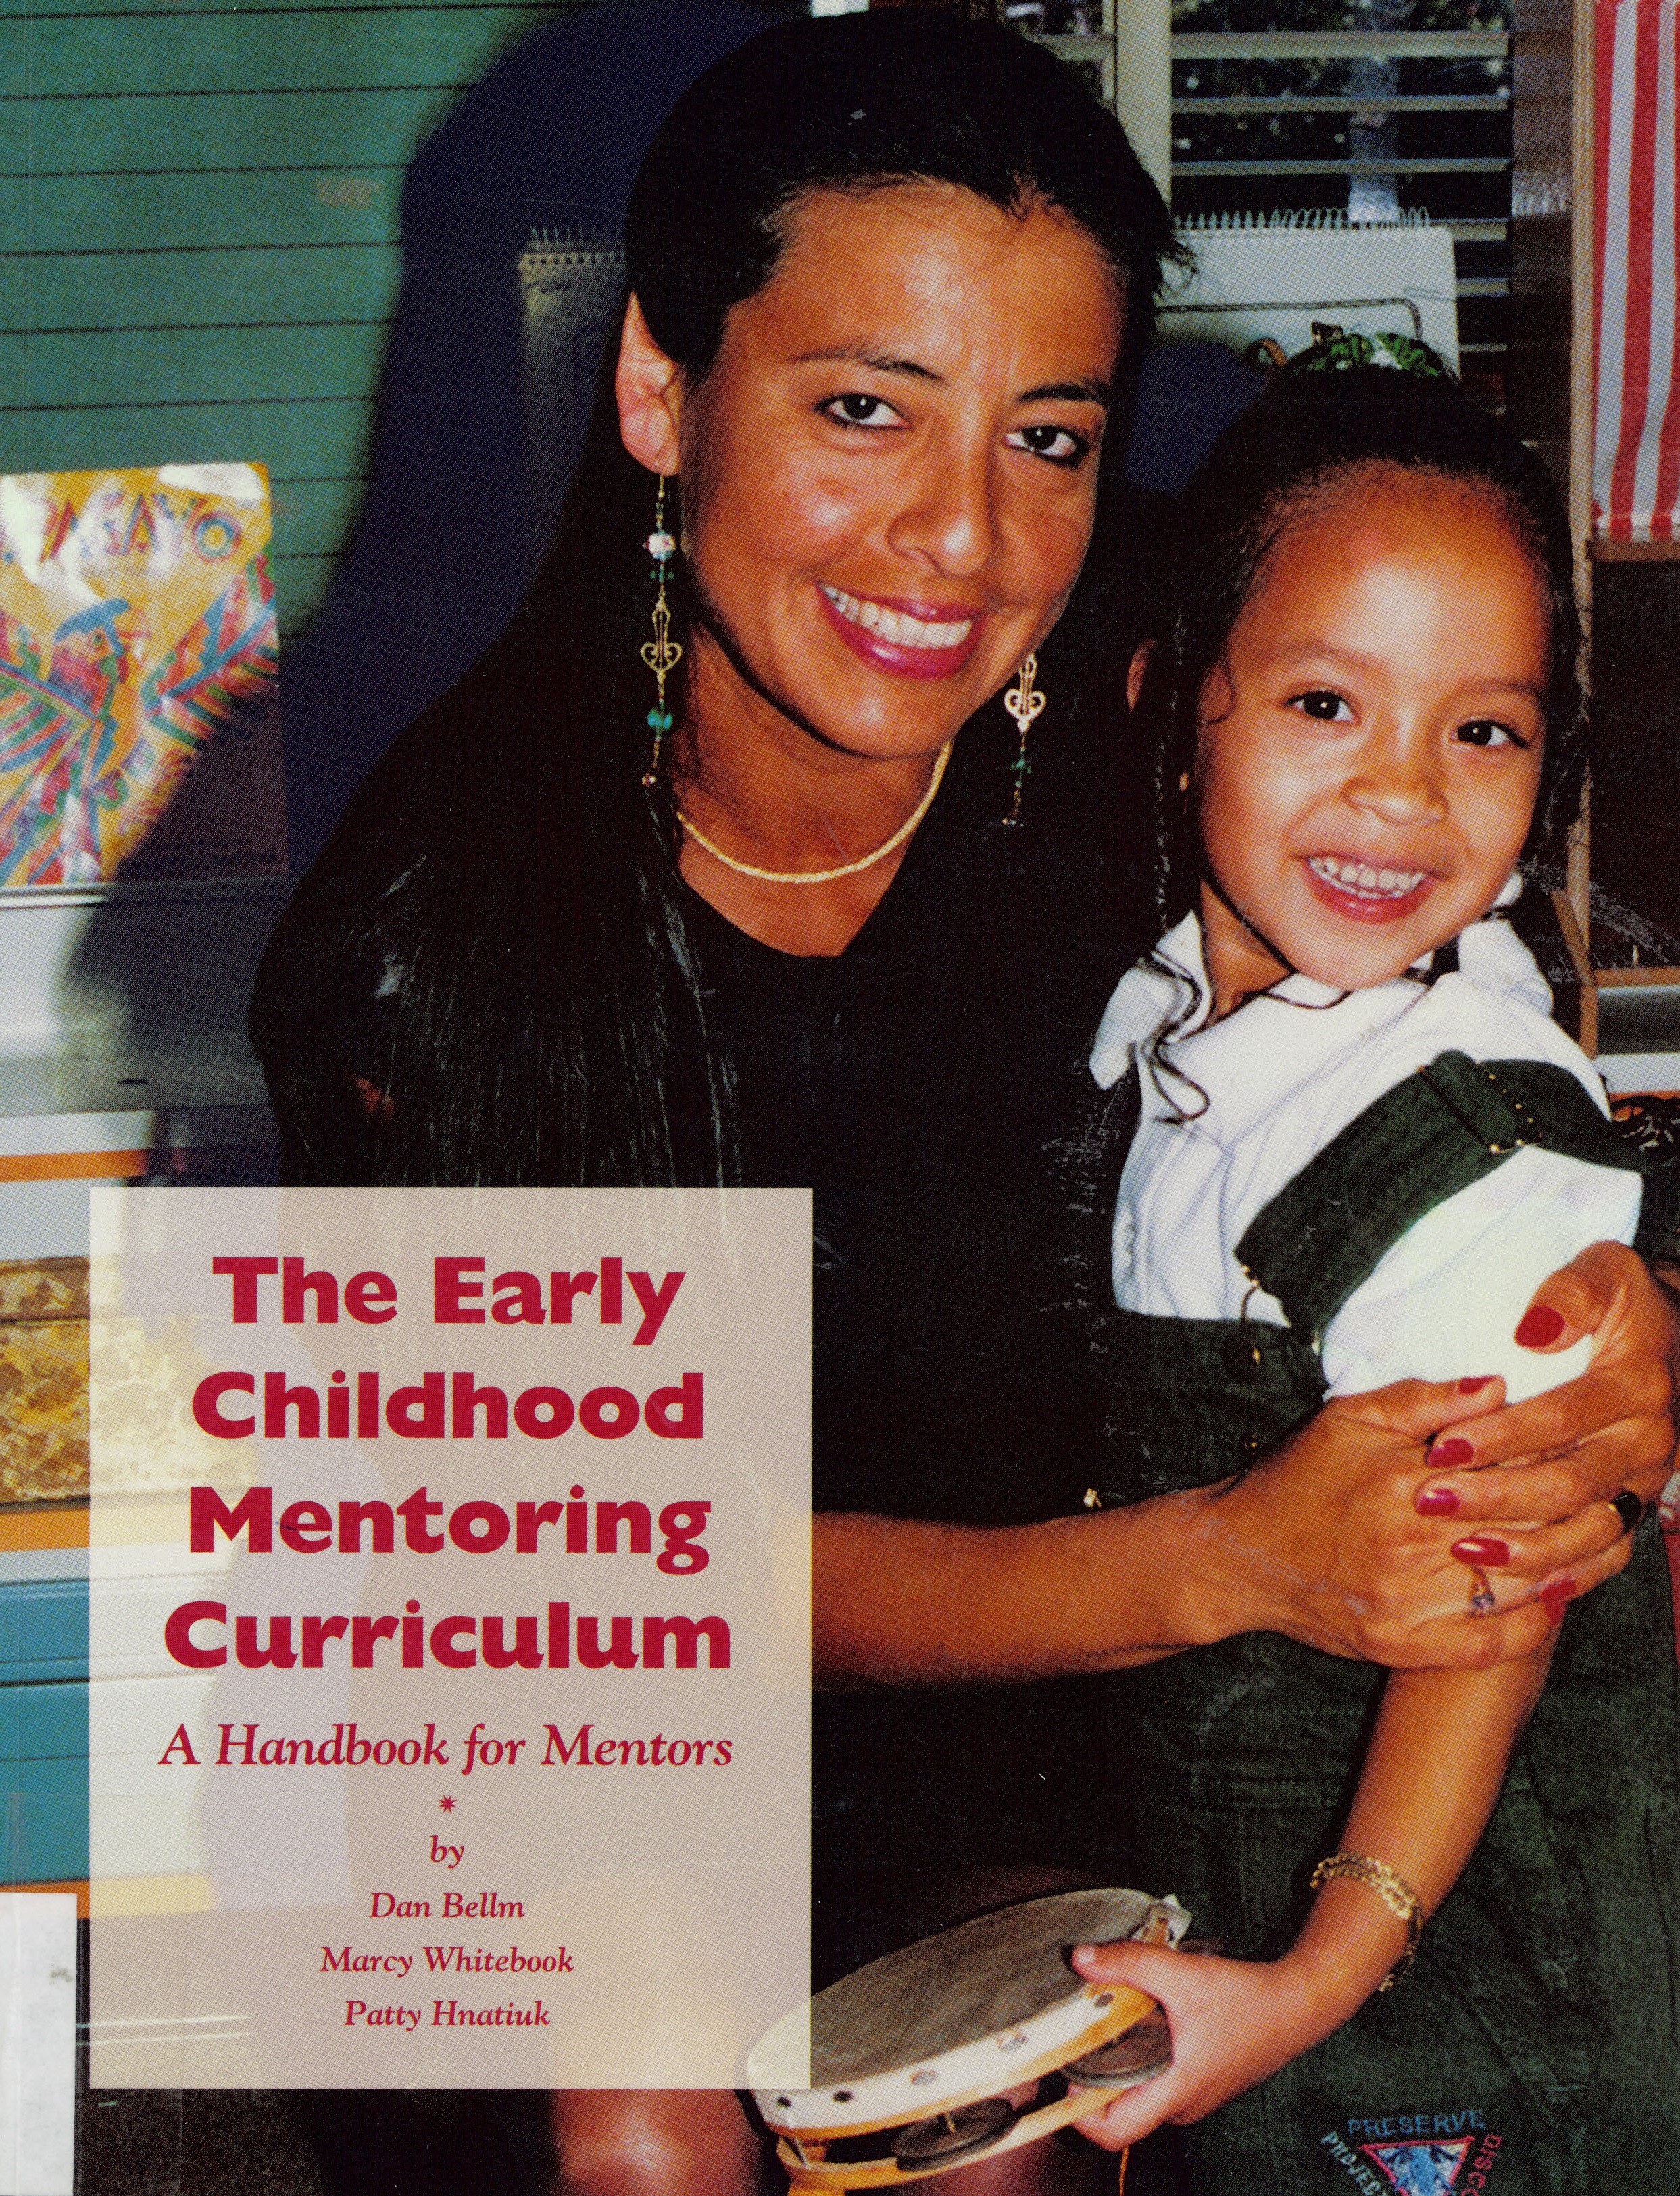 The early childhood mentoring curriculum : handbook